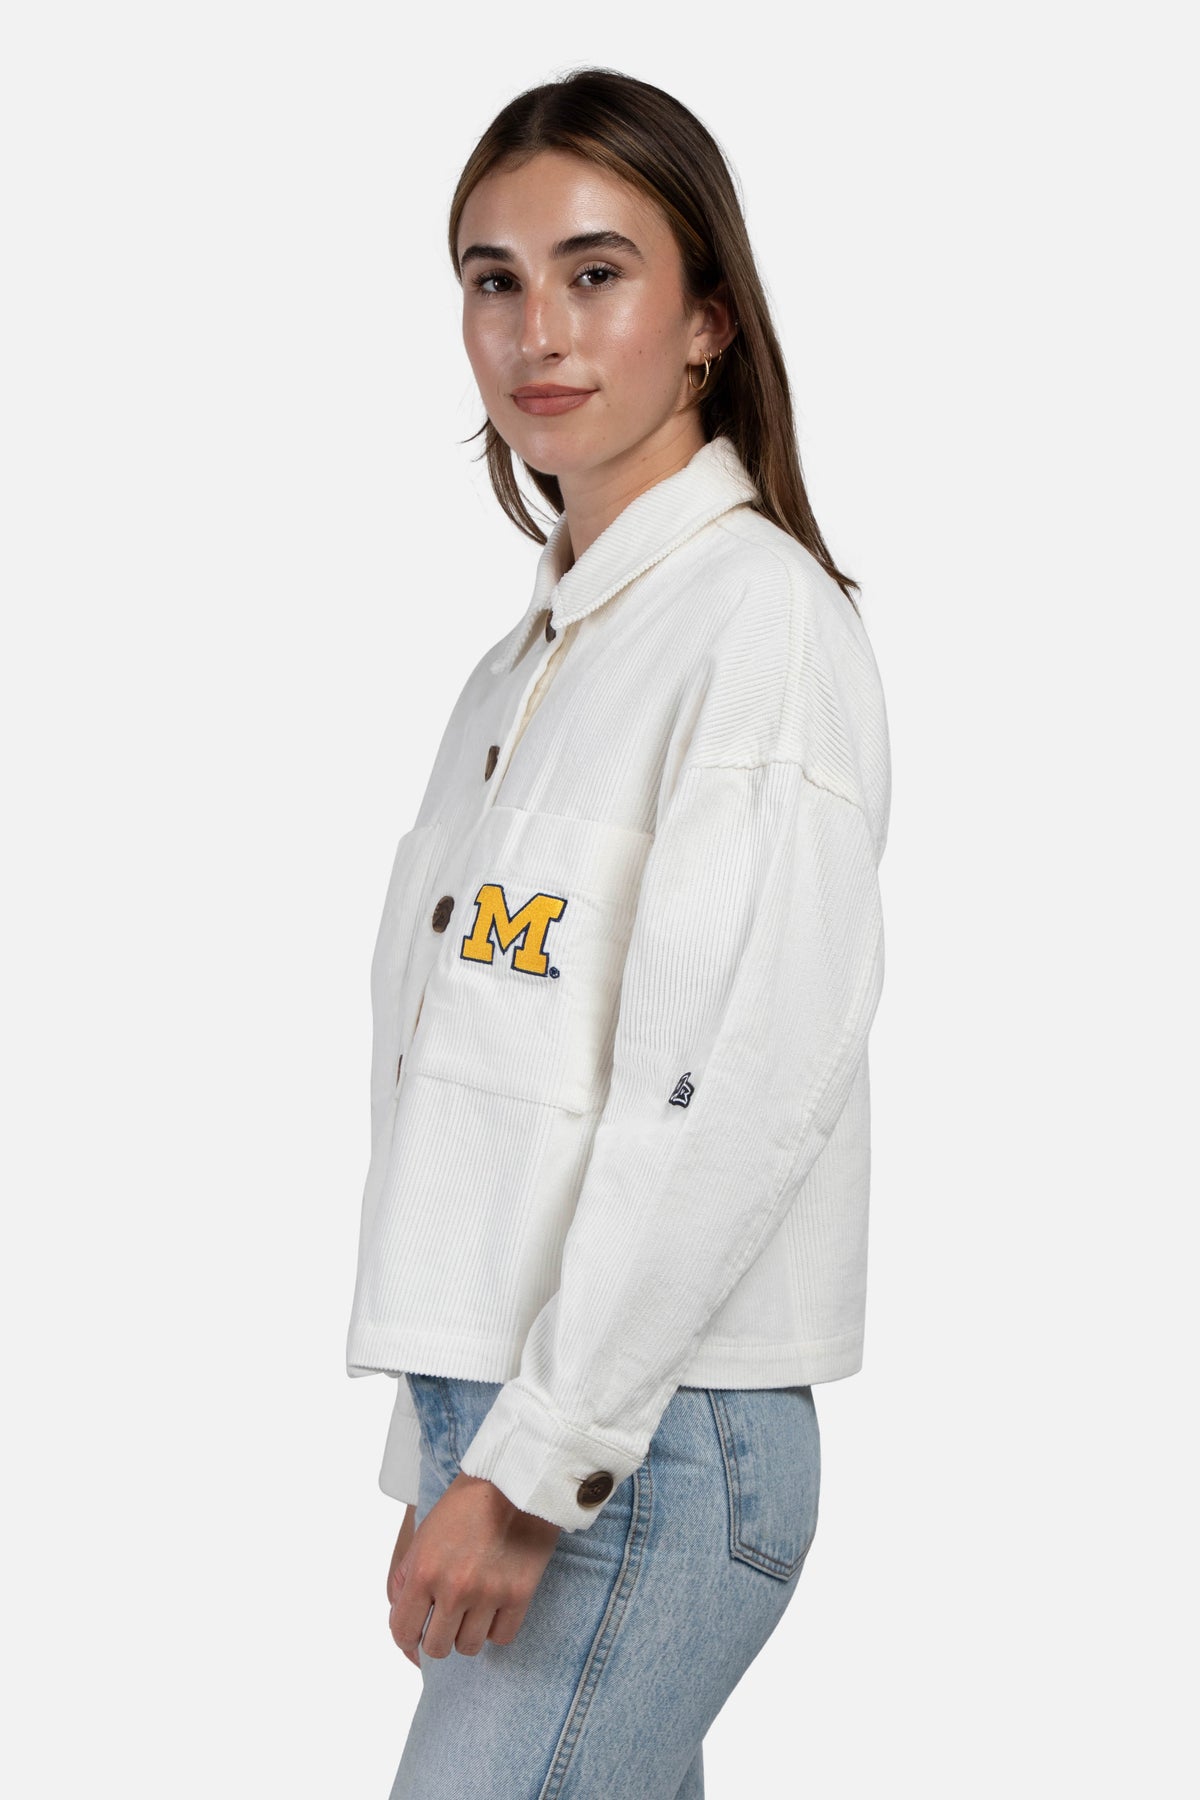 Michigan University Corded Jacket